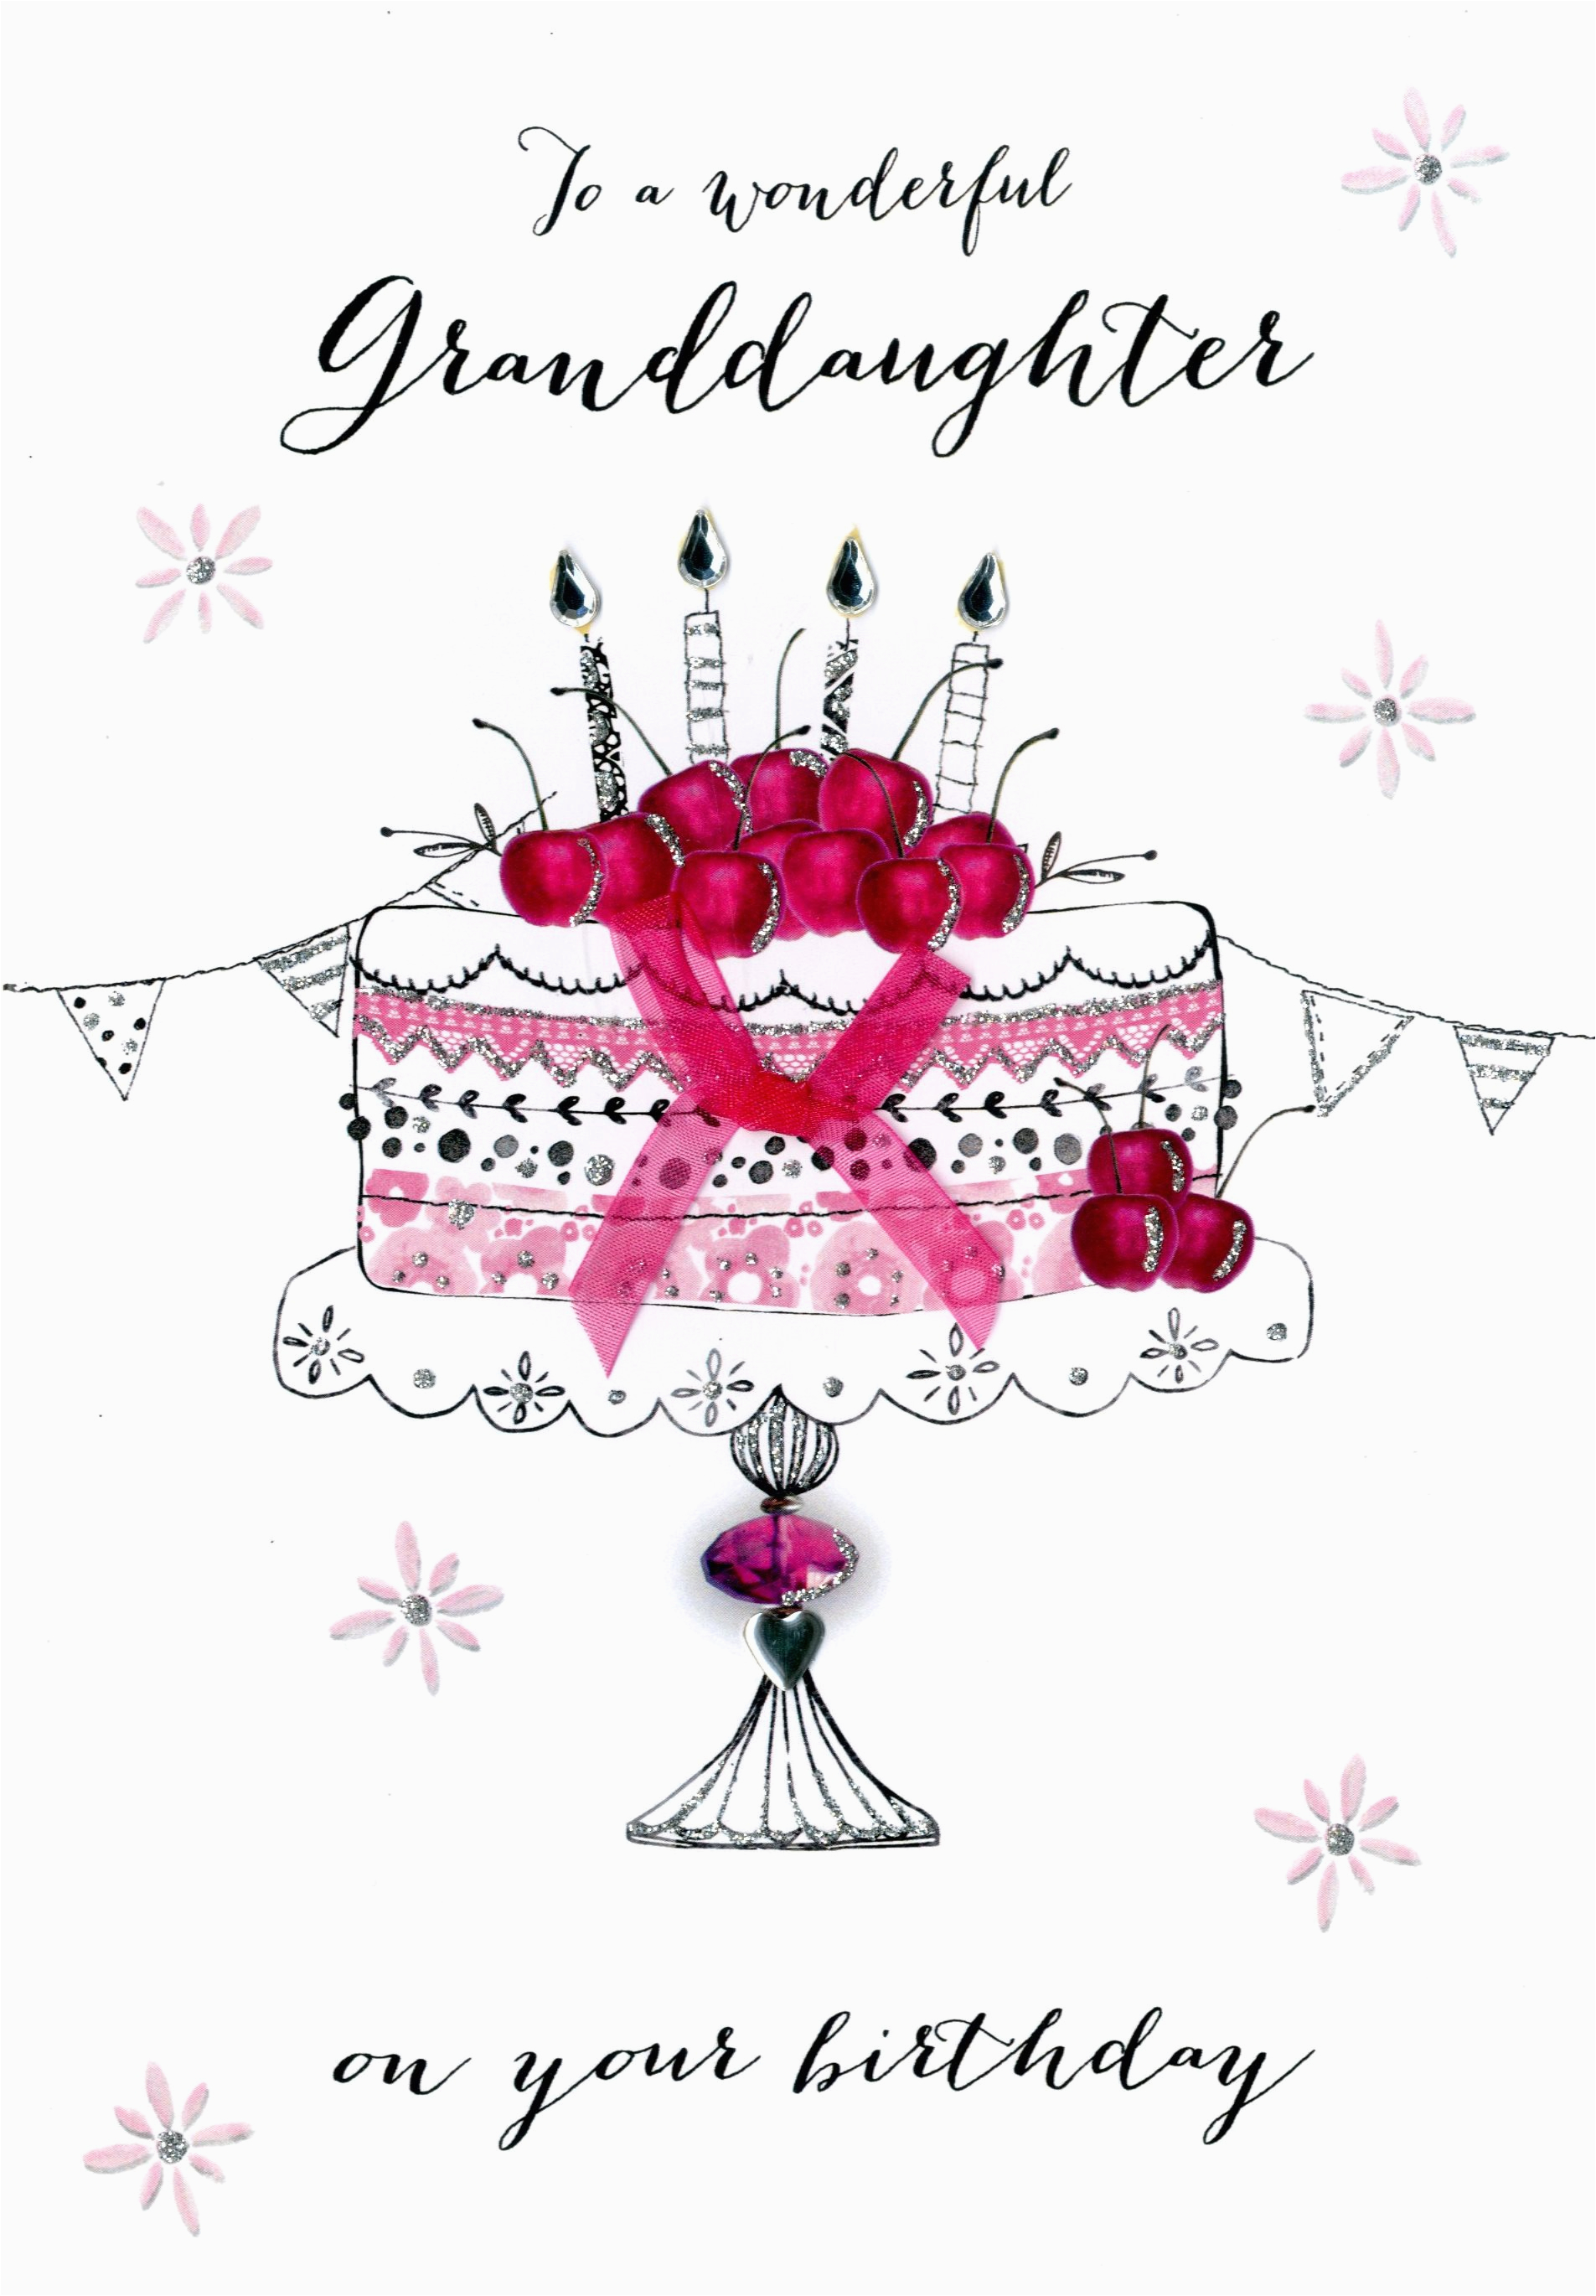 Birthday Cards for Granddaughters Wonderul Granddaughter Birthday Embellished Greeting Card